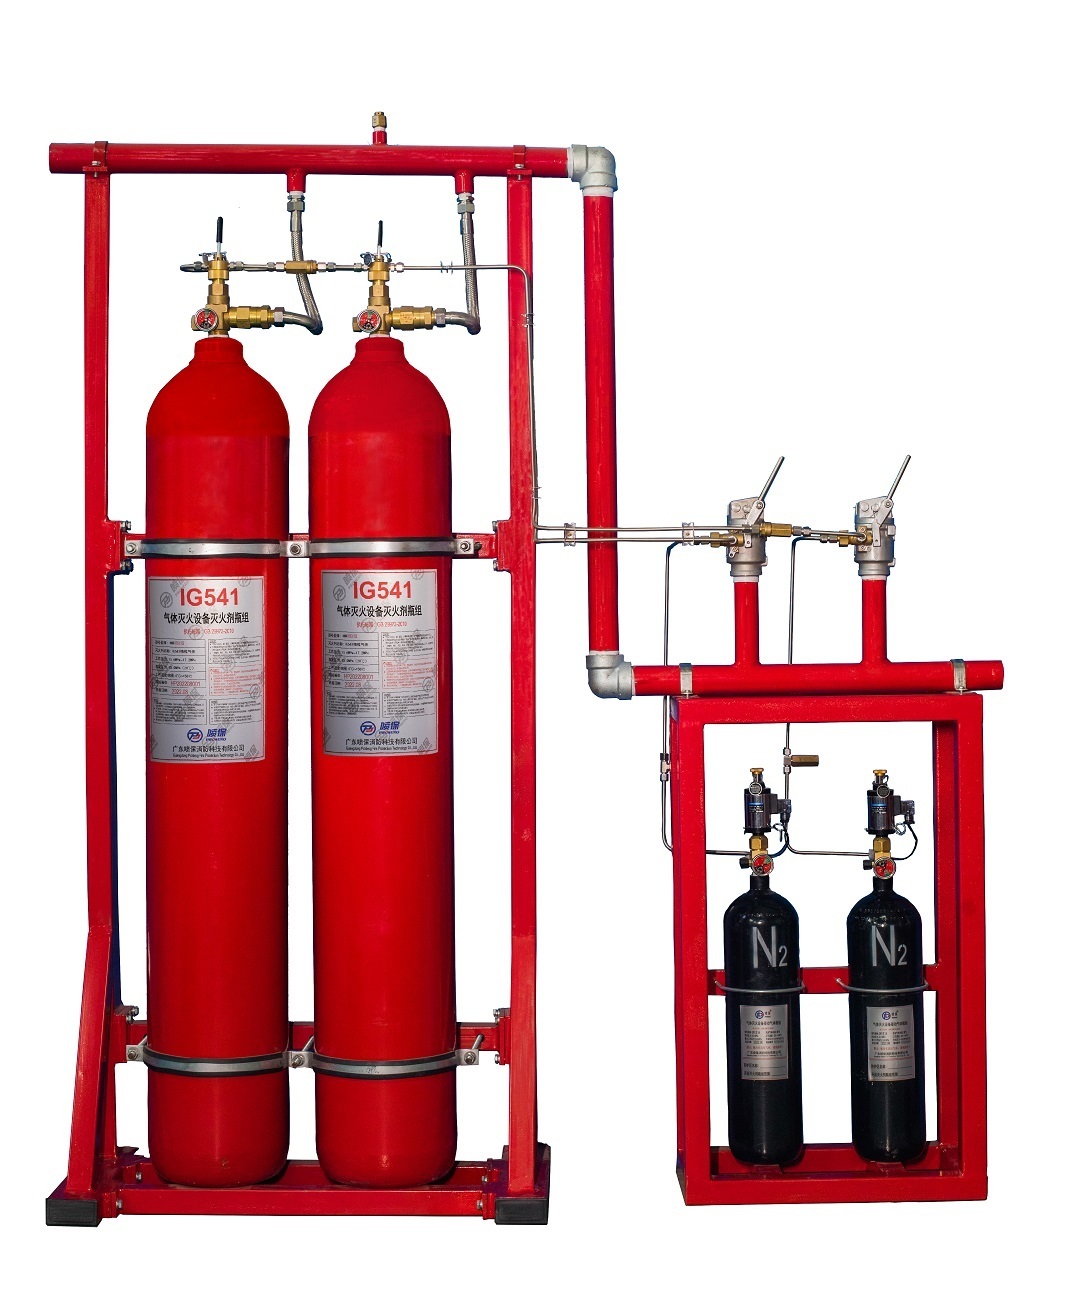 IG541 fire extinguishing equipment (20MPa)